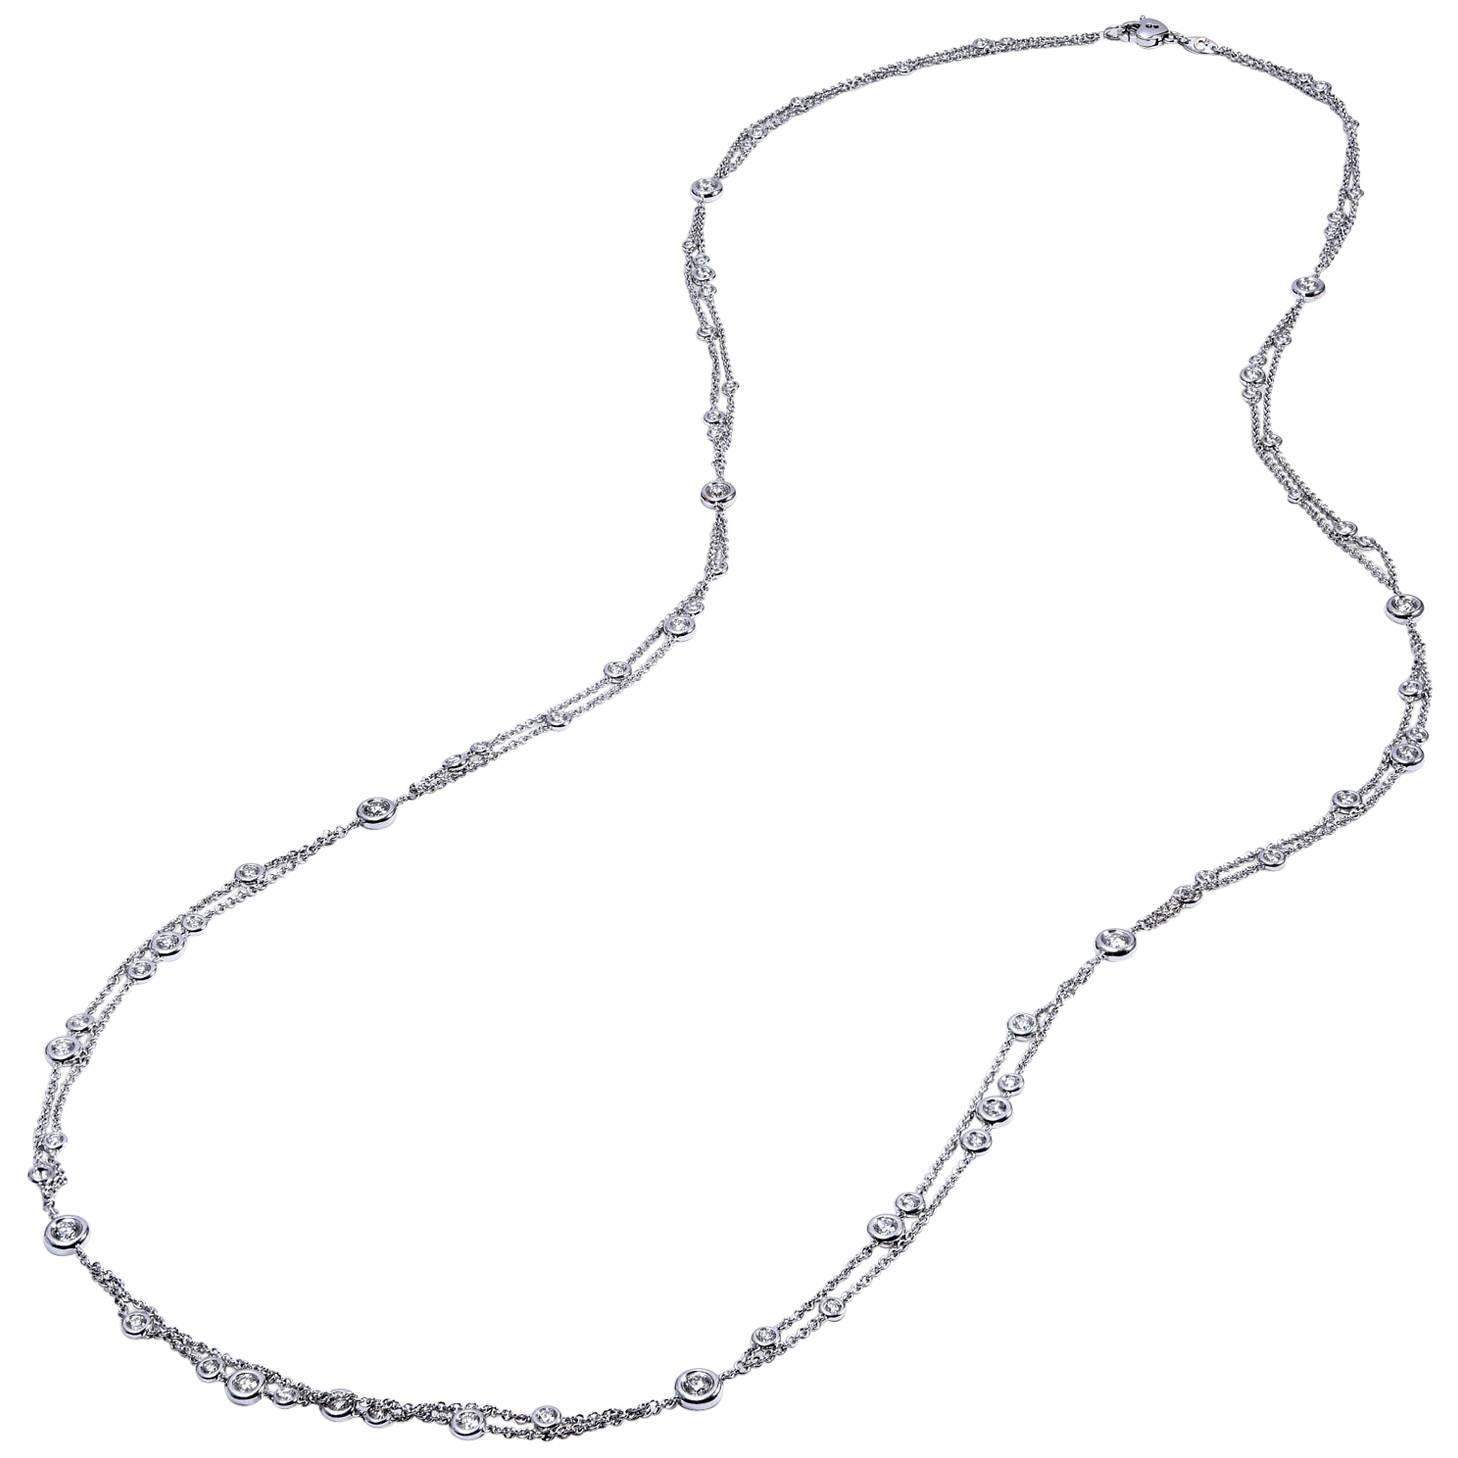 5.65 Carat Bezel-Set Diamond Chain